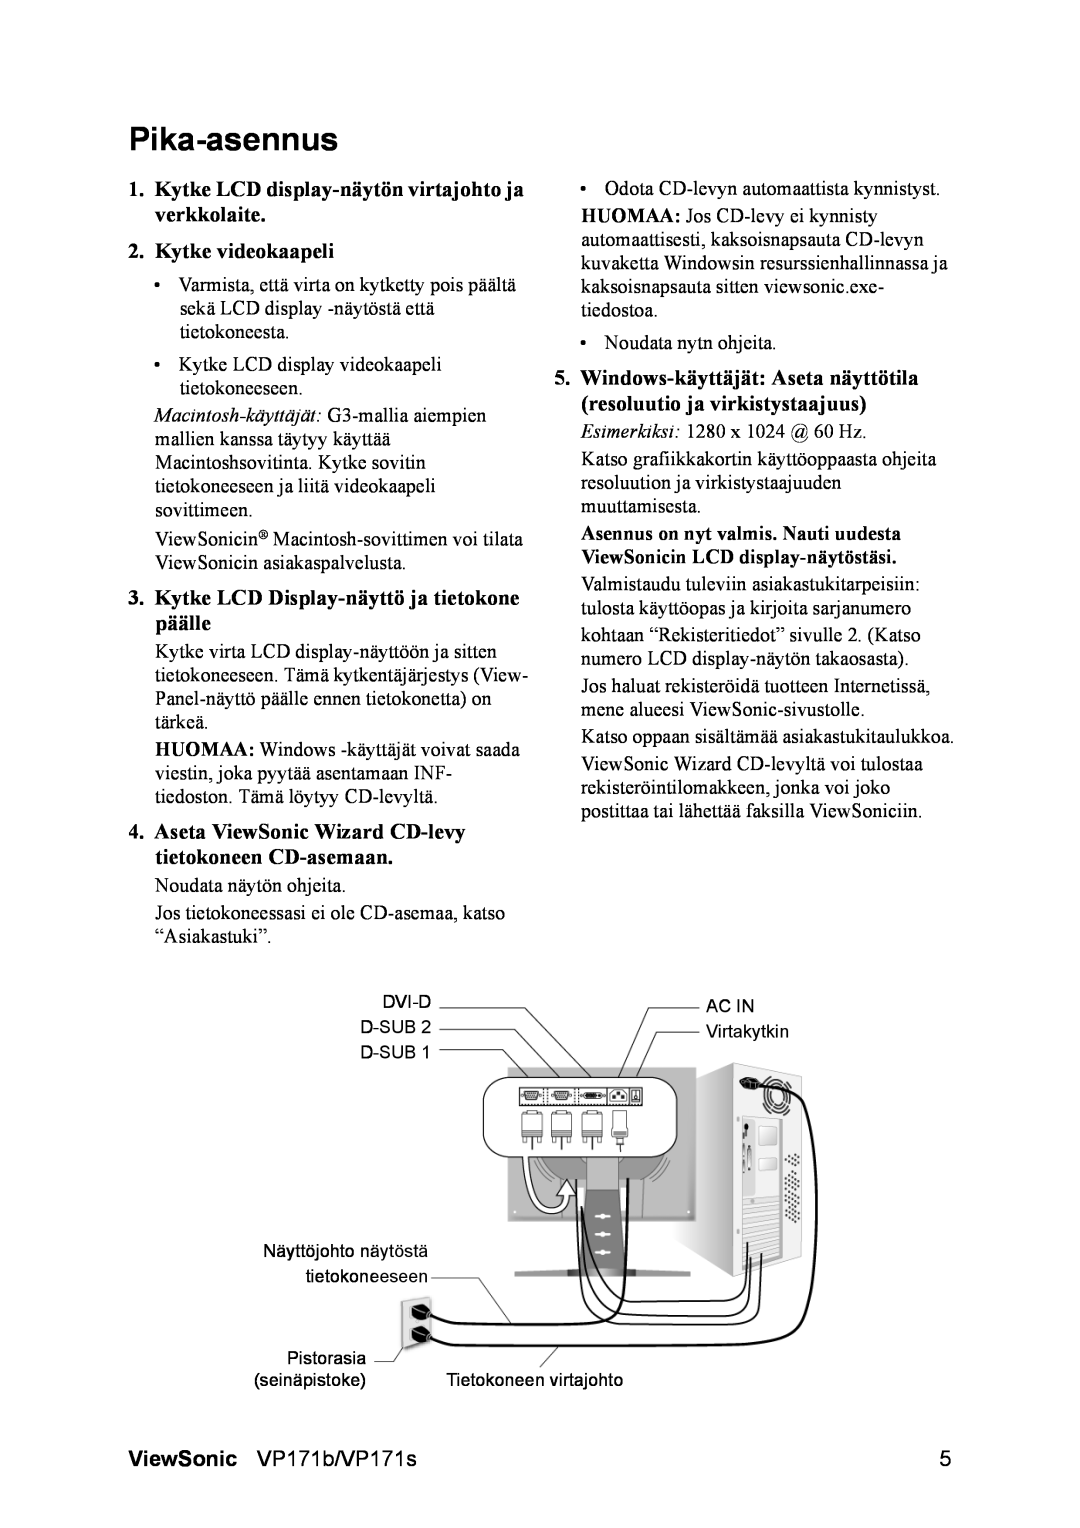 ViewSonic VP171b/VP171s manual Pika-asennus 